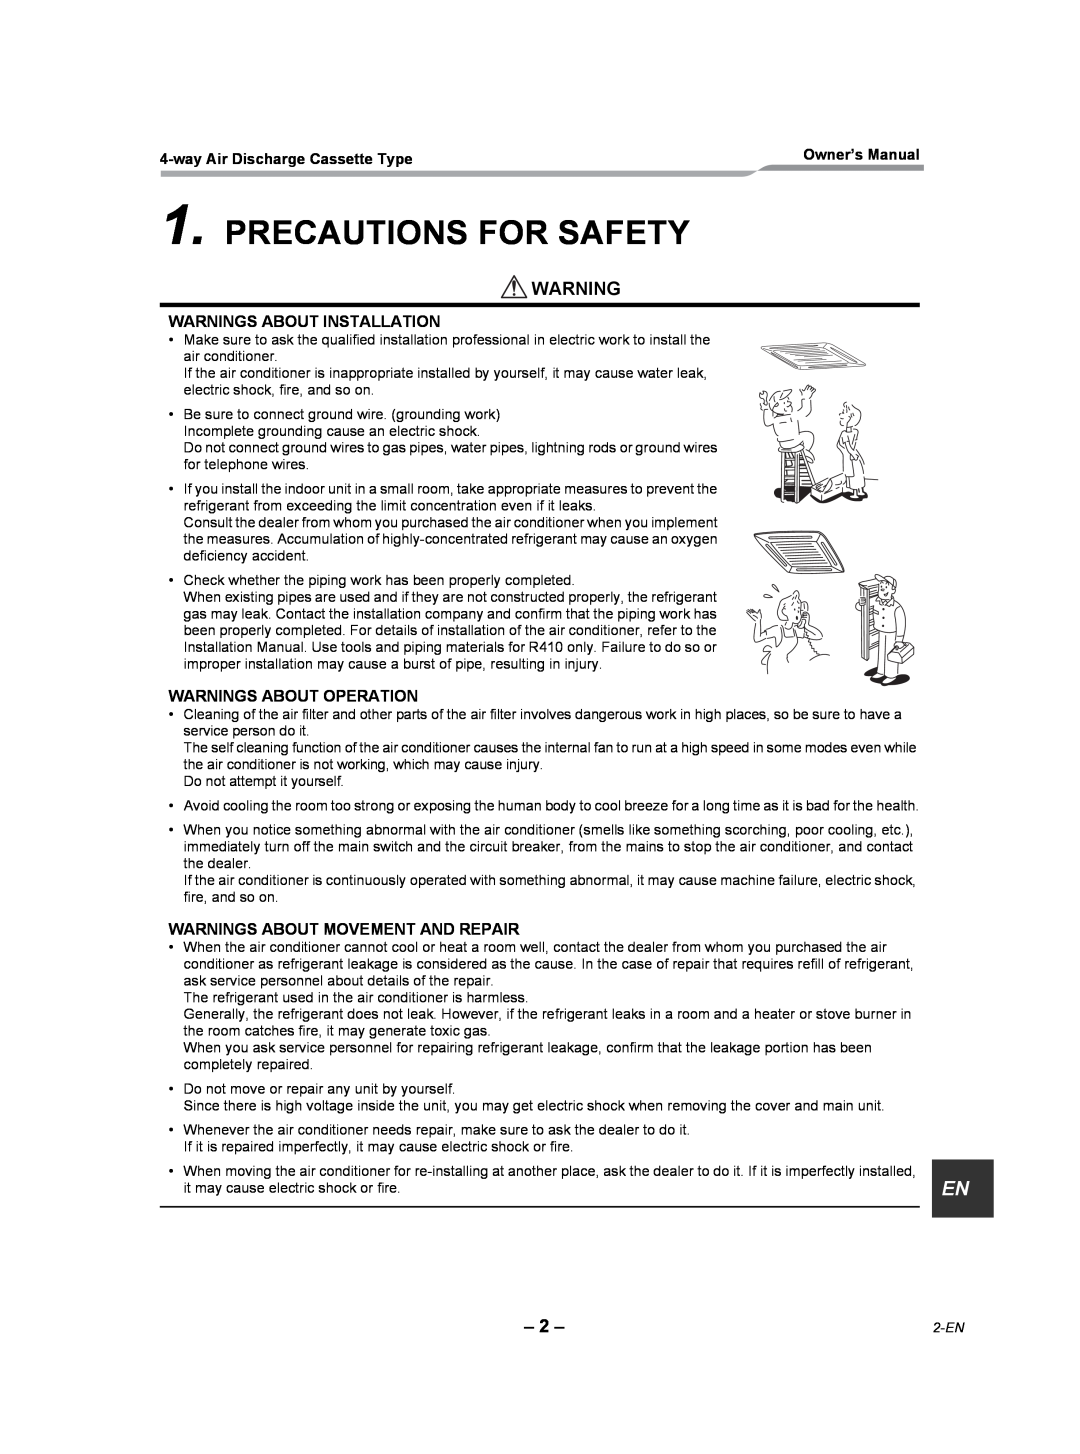 Toshiba RAV-SP360UT-UL, RAV-SP420UT-UL Precautions For Safety, Warnings About Installation, Warnings About Operation 